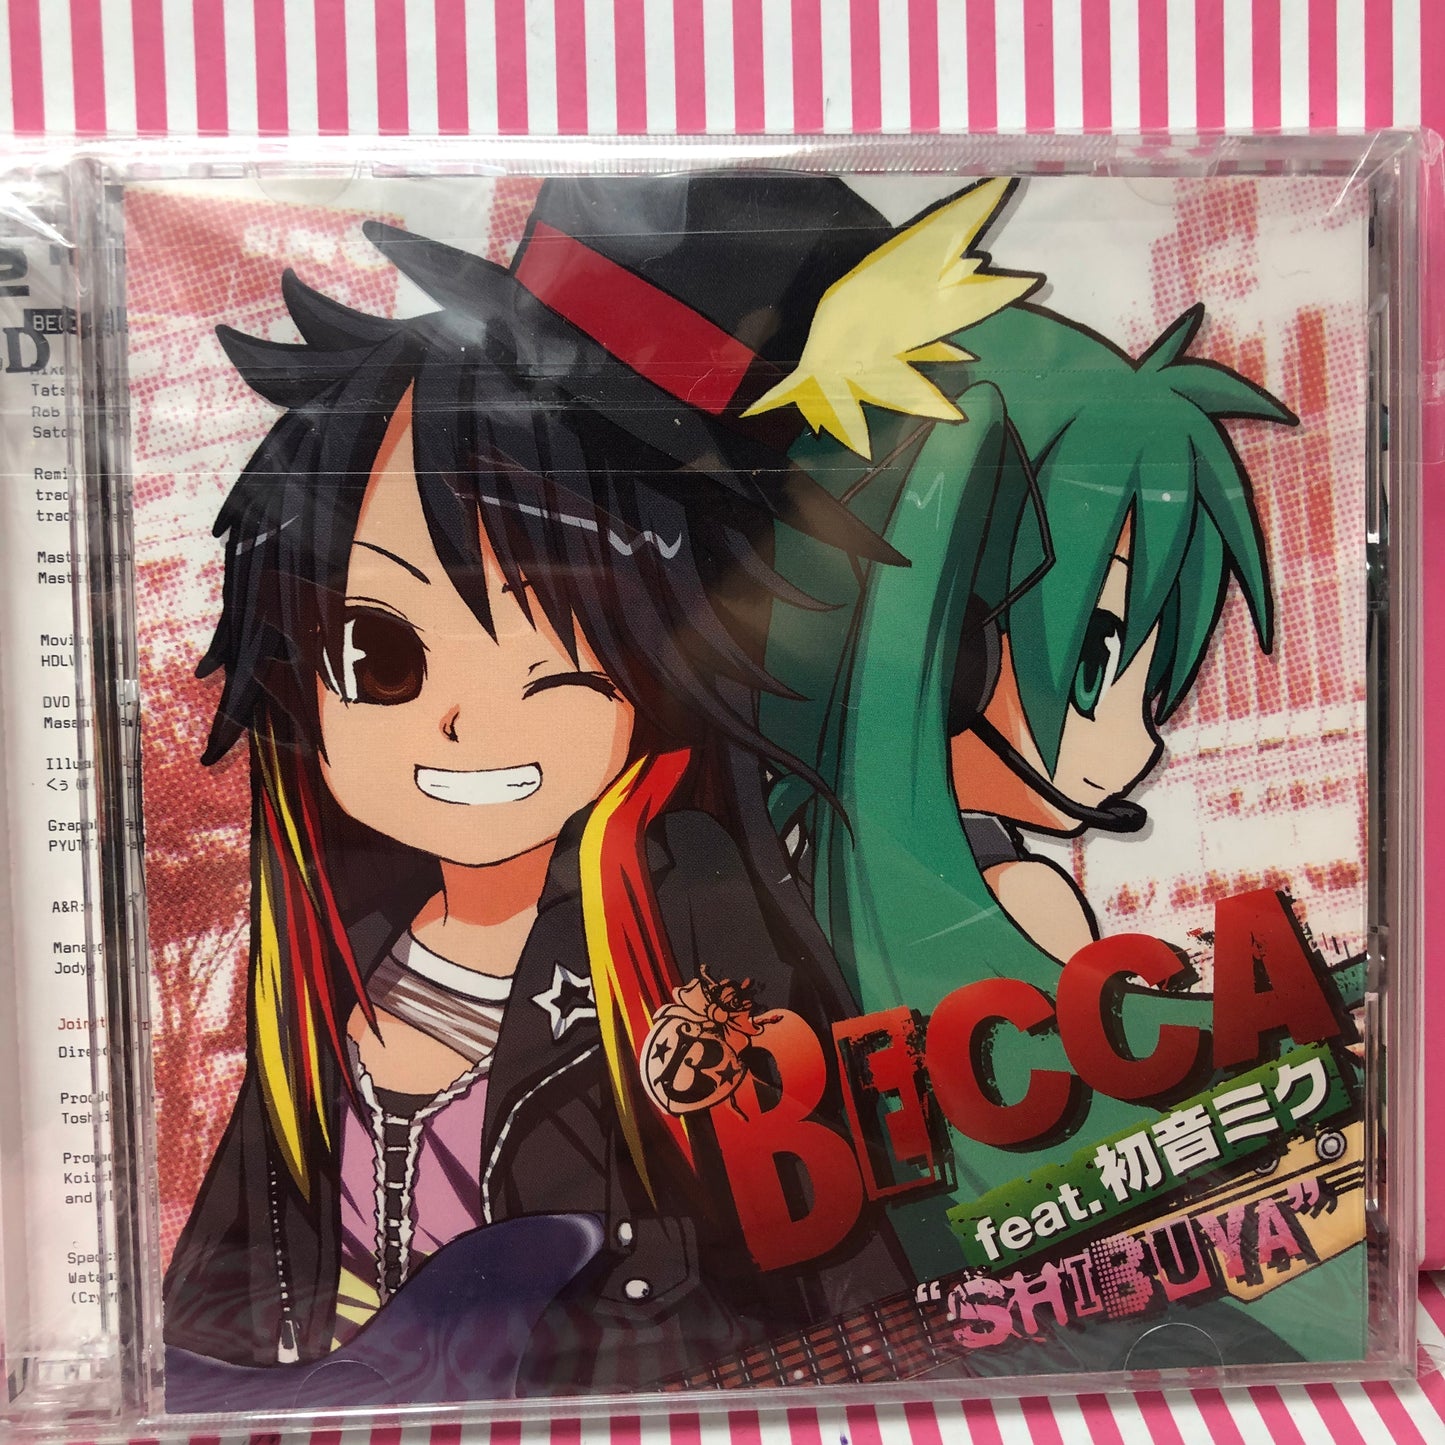 BECCA ft. Hatsune Miku - "Shibuya" CD + DVD